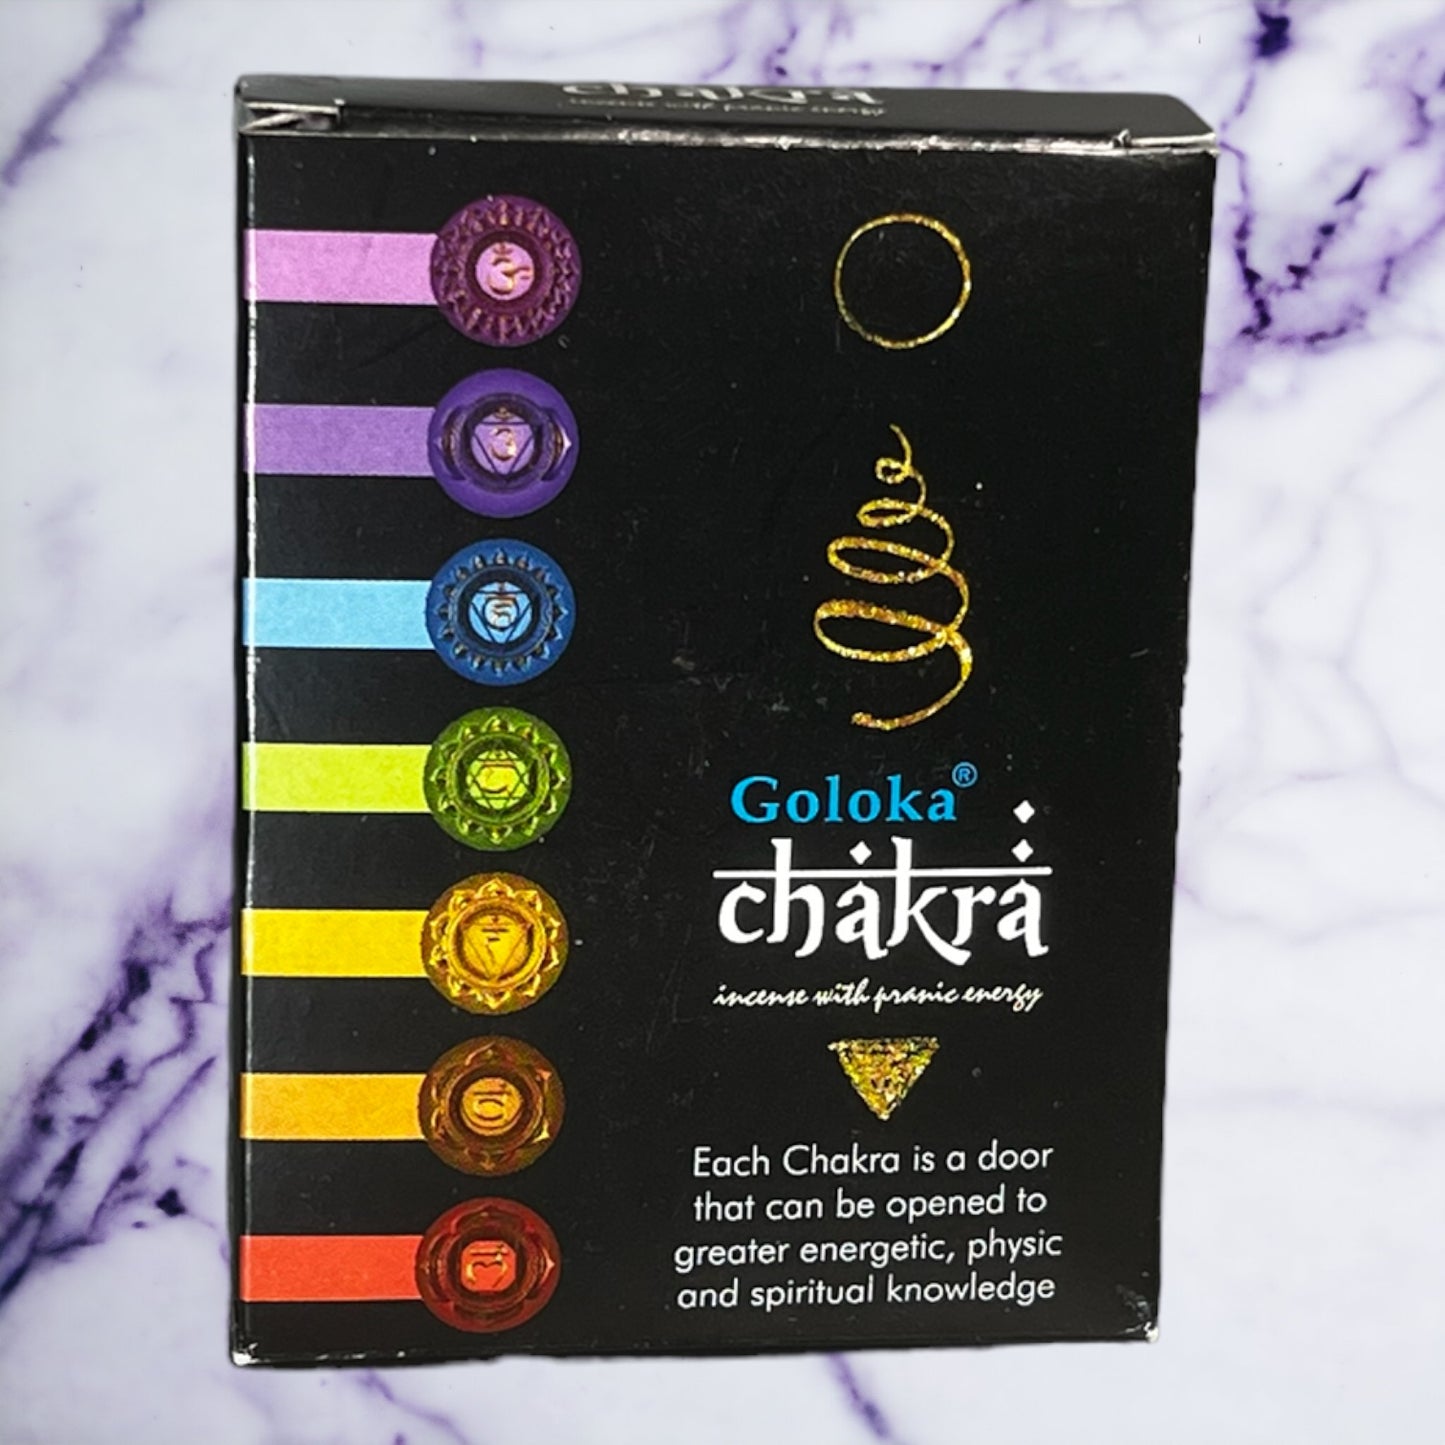 Goloka Chakra Cone Incense